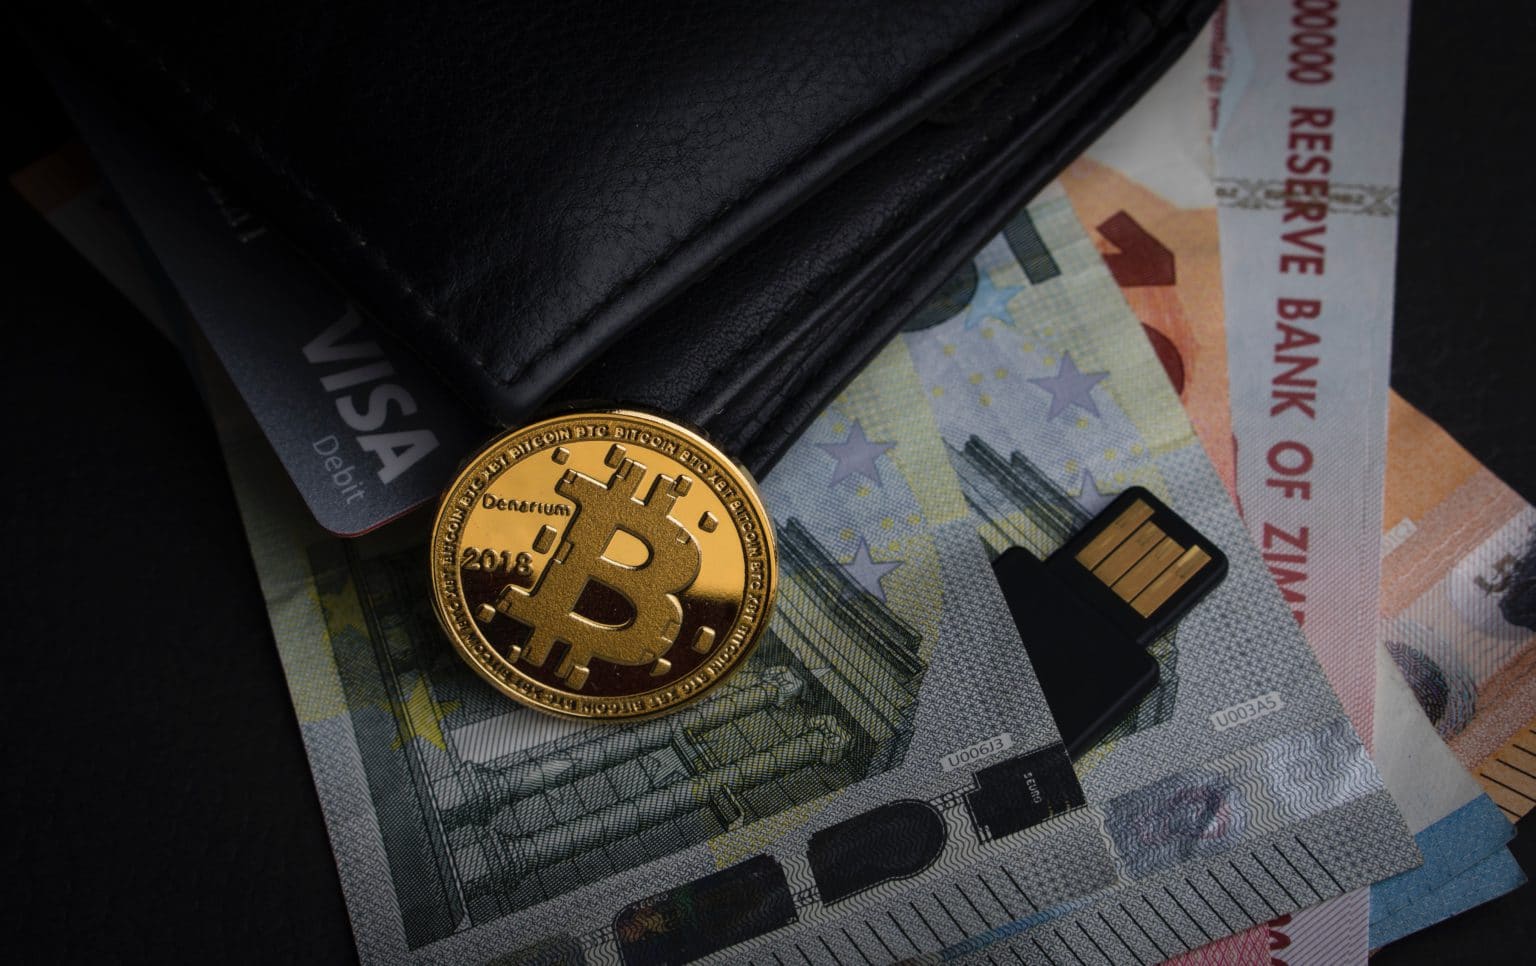 17 digit bitcoin address gas ethereum price euro